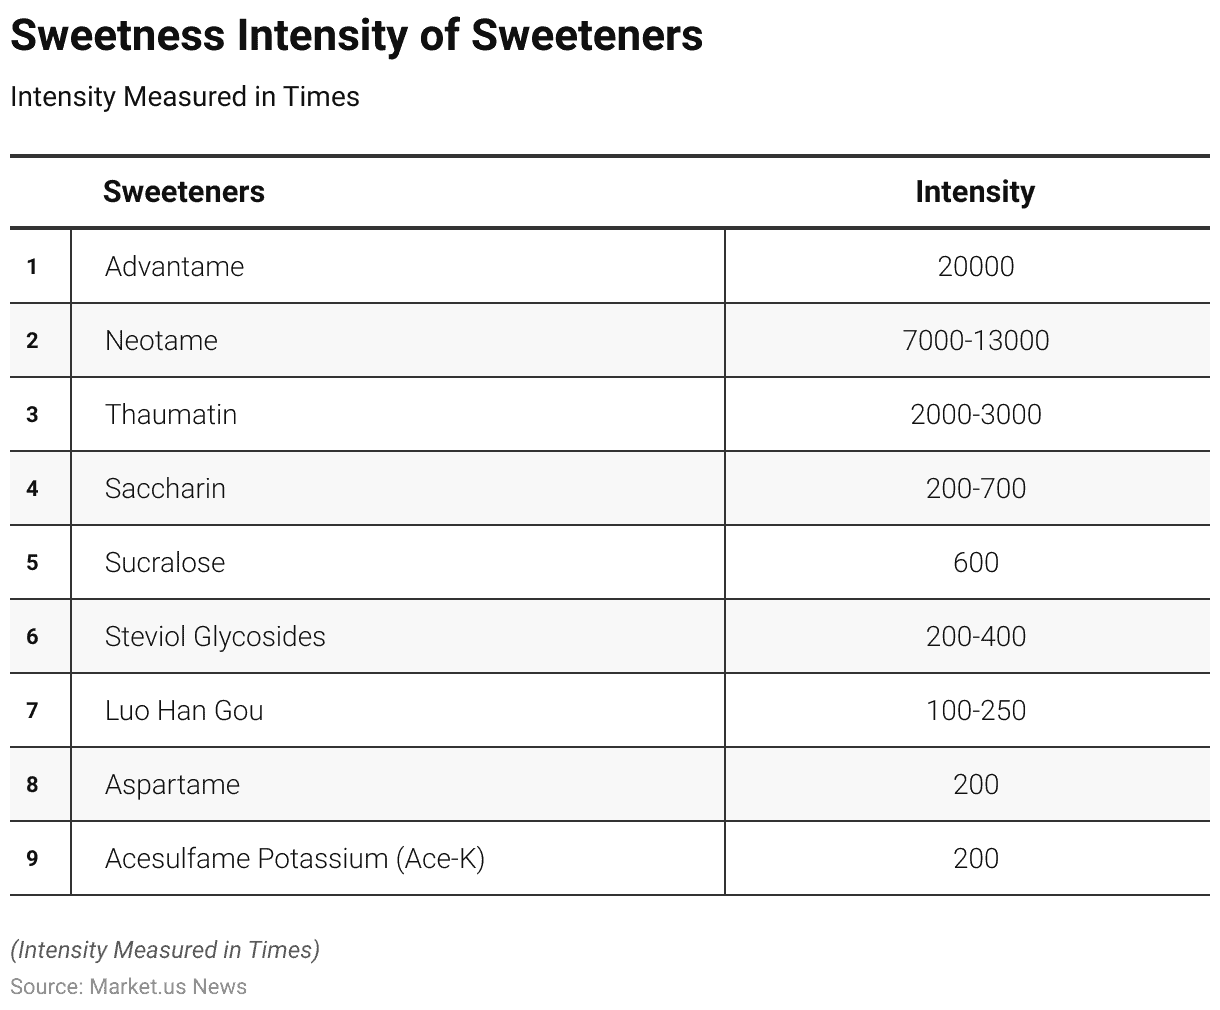 Sweetener Statistics